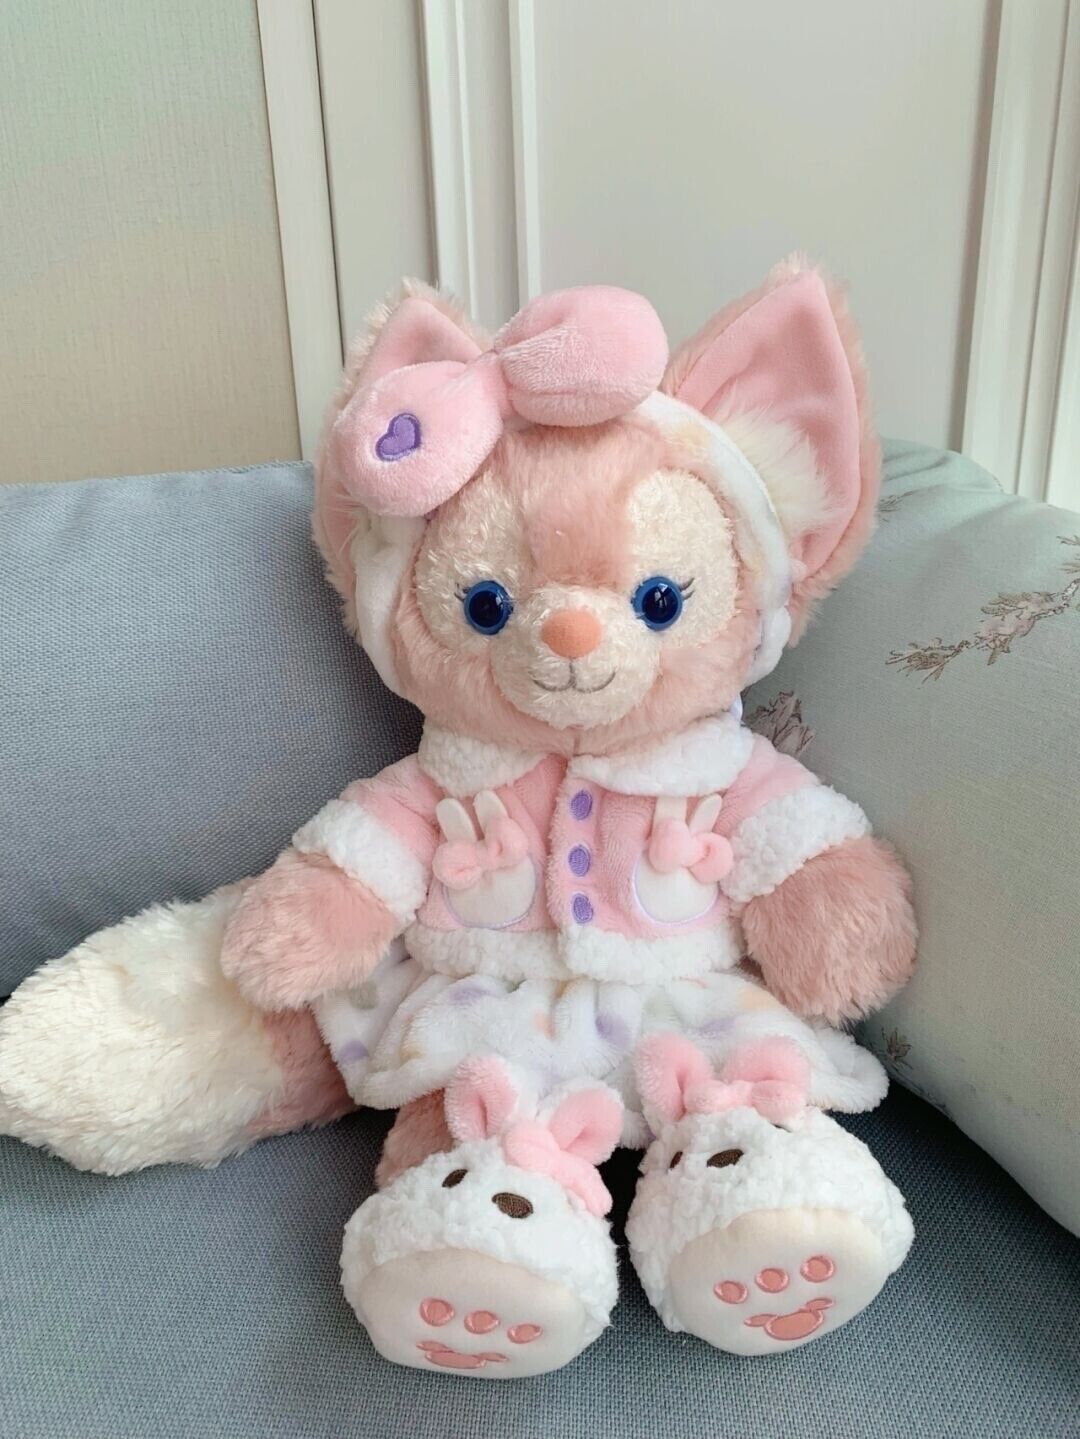 LinaBell Plush Doll Disney Pink Fox Toys Collection Birthday Christmas Xmas Gift